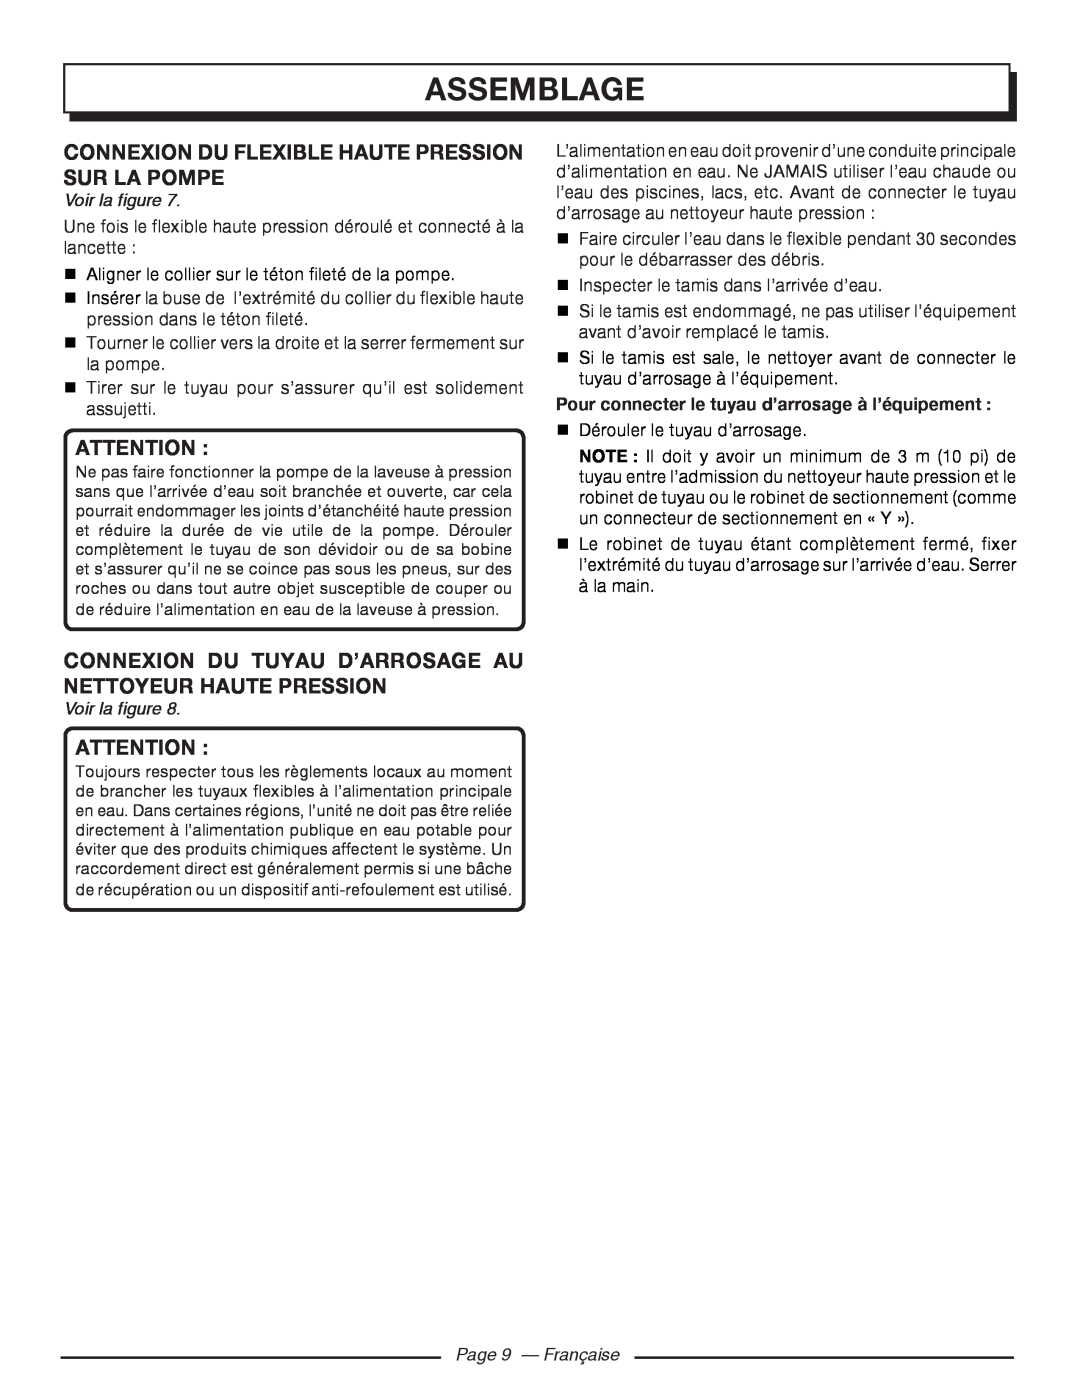 Homelite UT80516 manuel dutilisation Page 9 - Française, Assemblage 